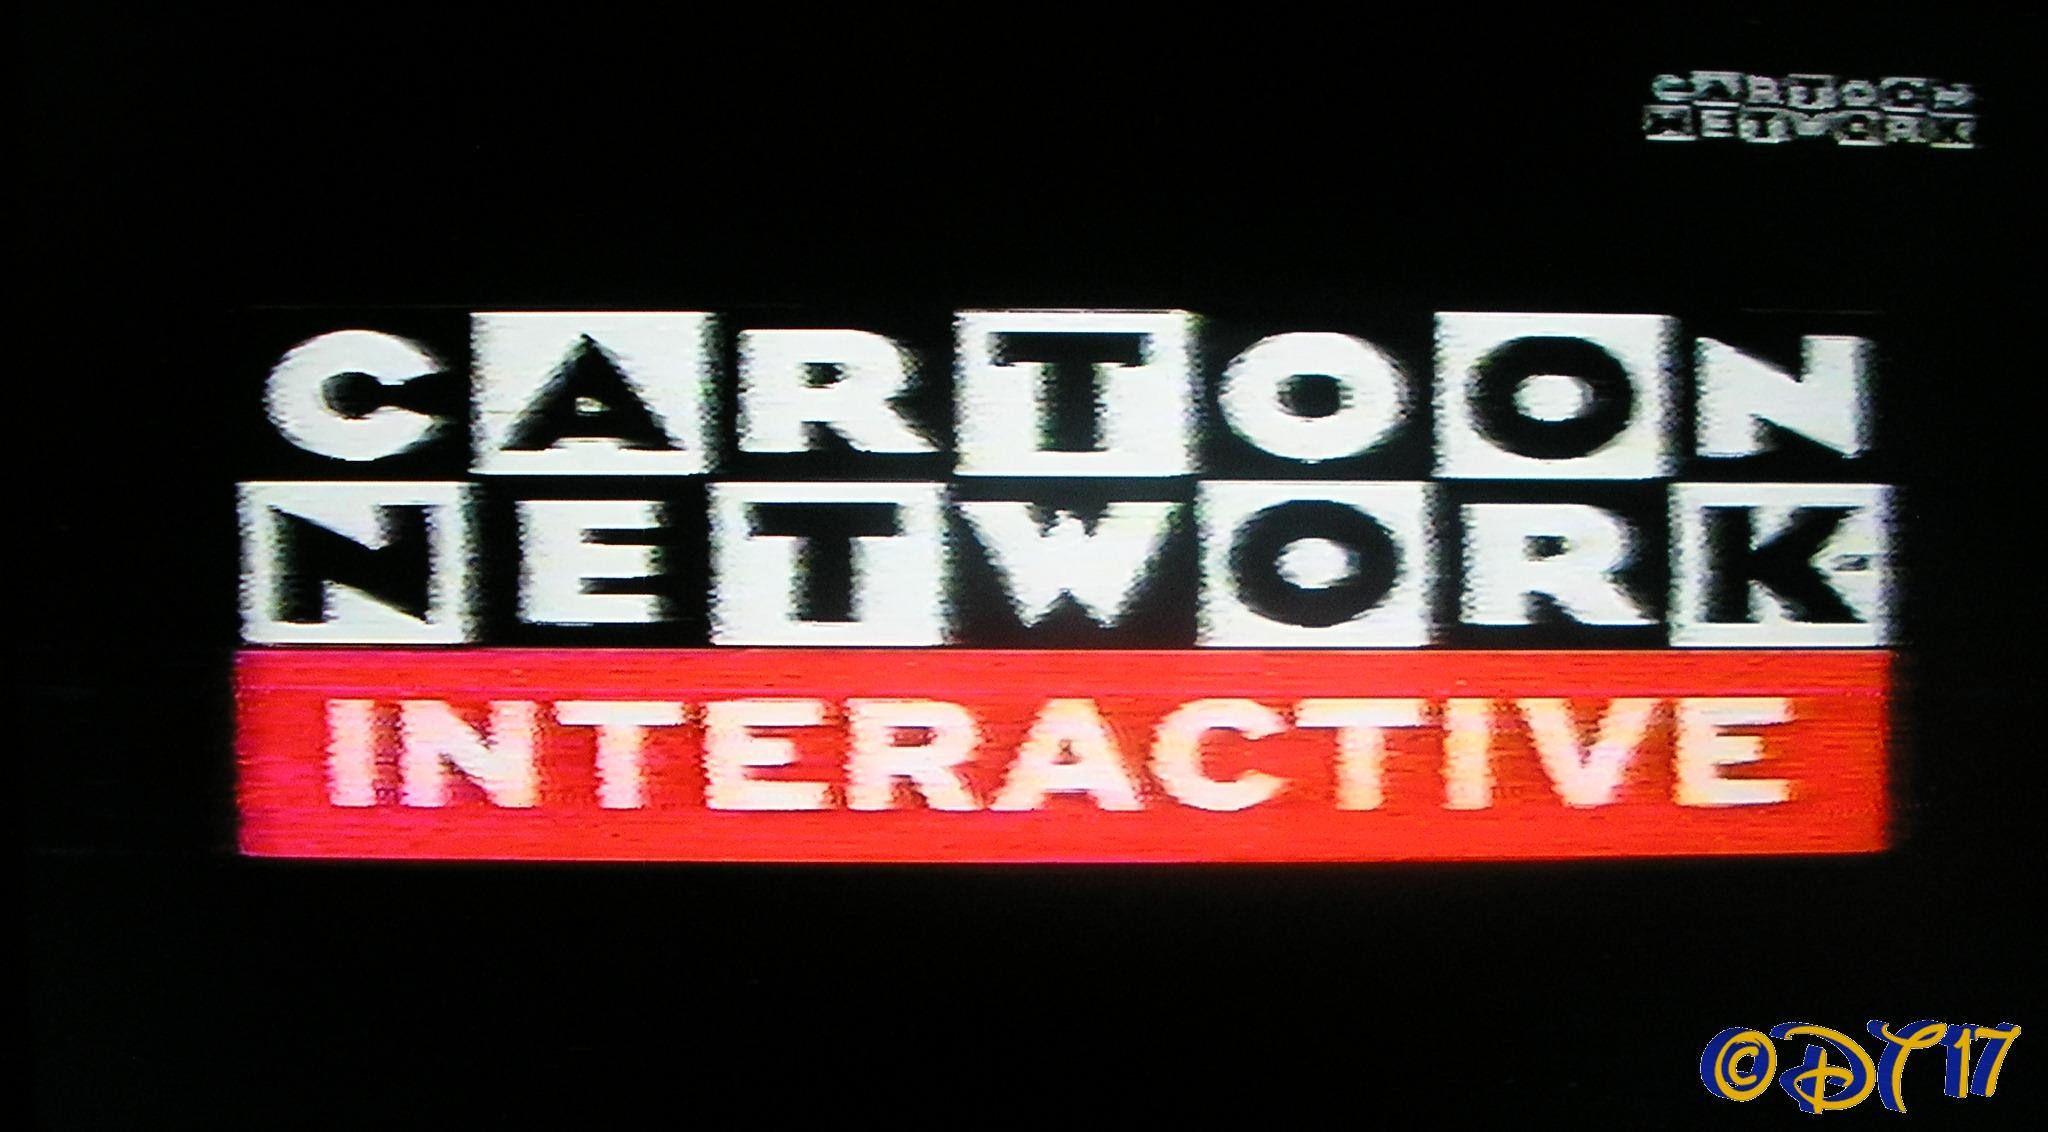 Cartoon Network Interactive Logo - Cartoon Network UK. Cartoon Network UK launches their new r